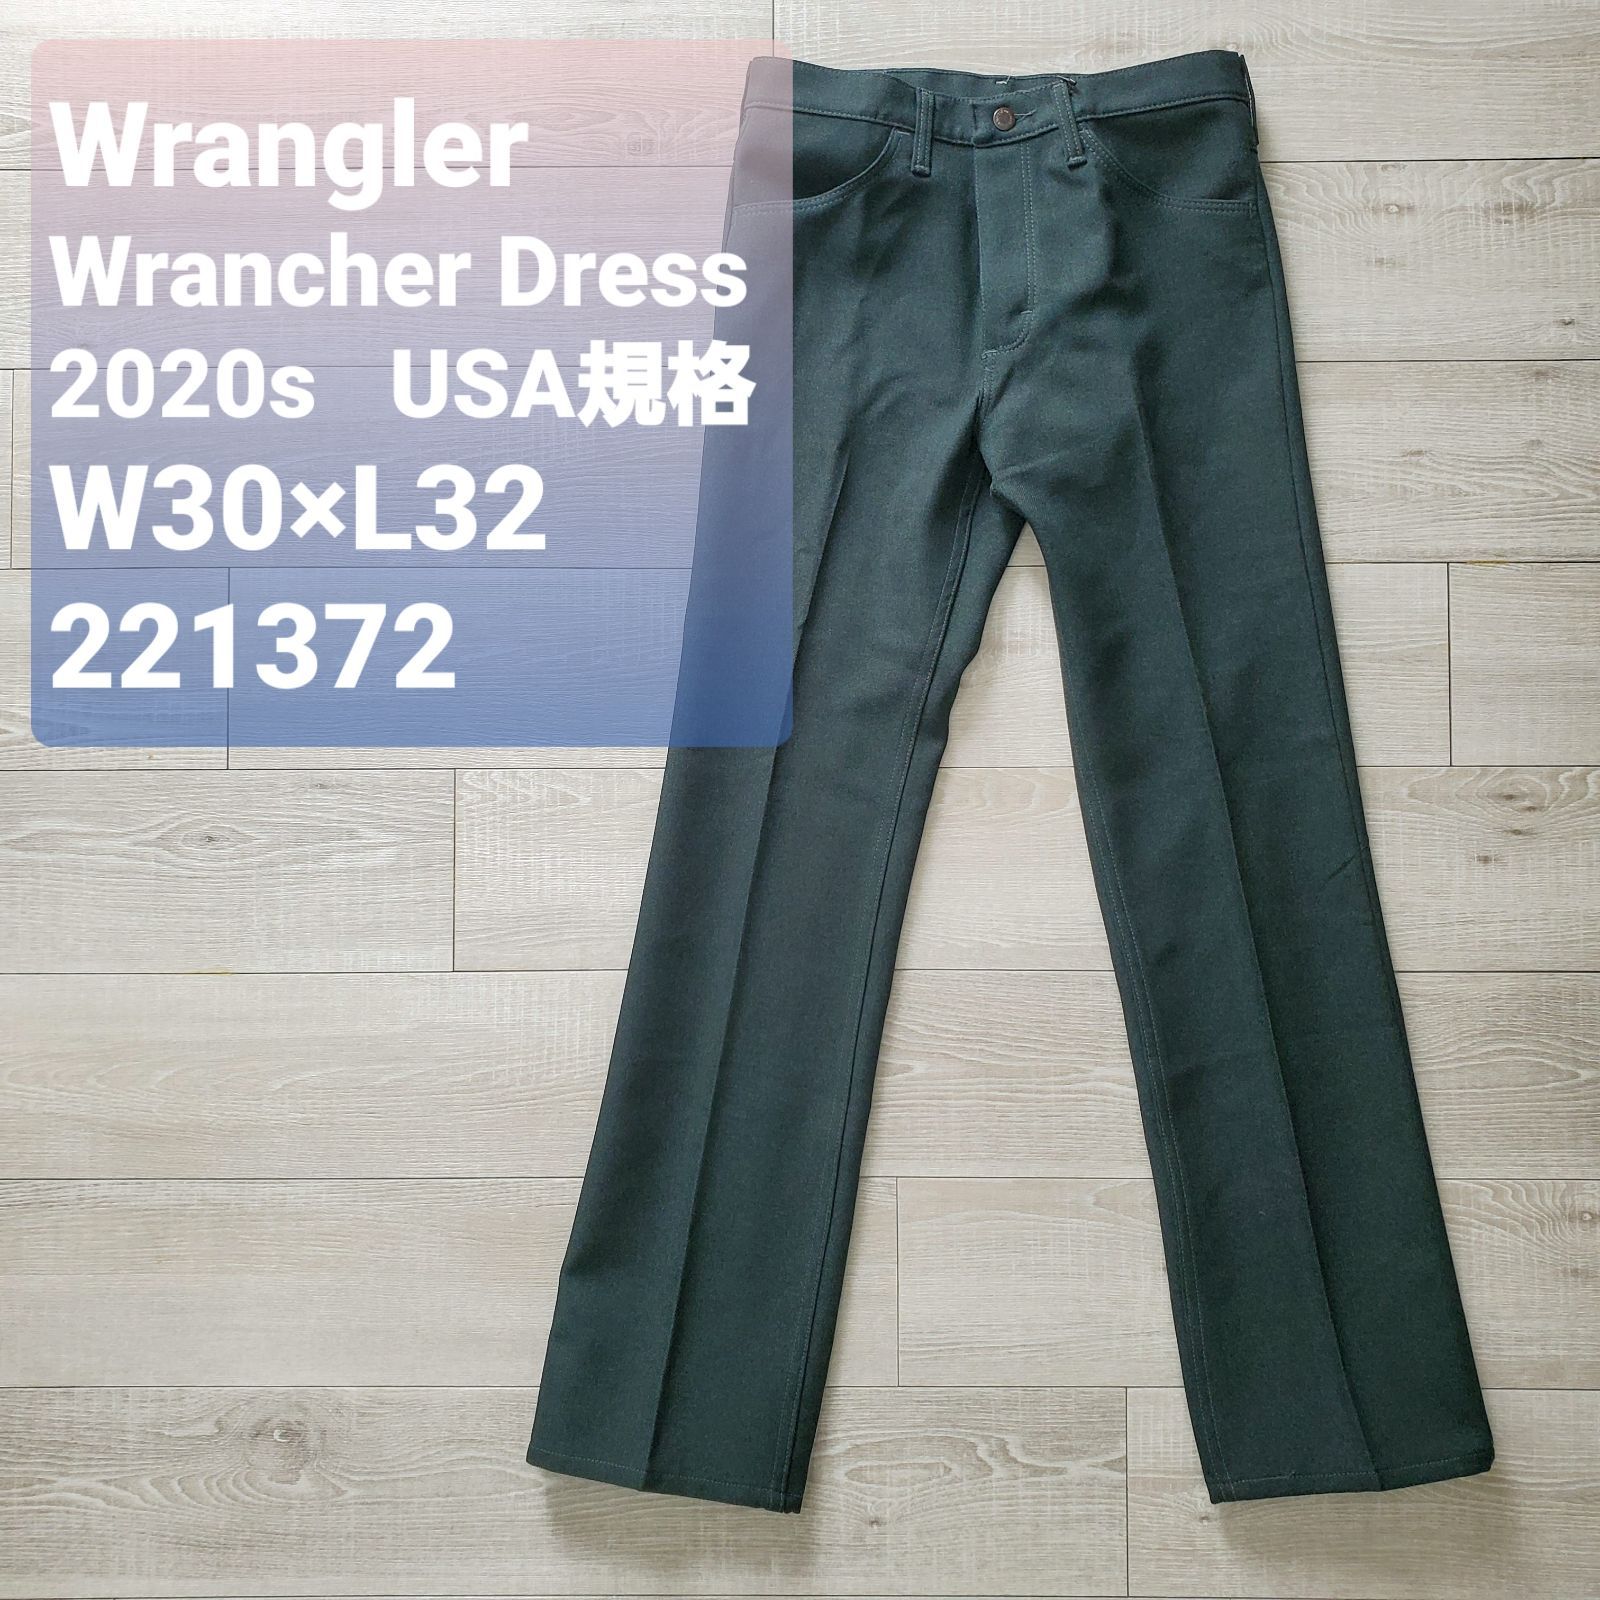 Wranglerラングラー■極美品 現行品 WRANCHER DRESS JEANS 82FH 深緑 USA規格 W30 L32 ブーツカット  フレアパンツ スタプレ ランチャードレスジーンズ